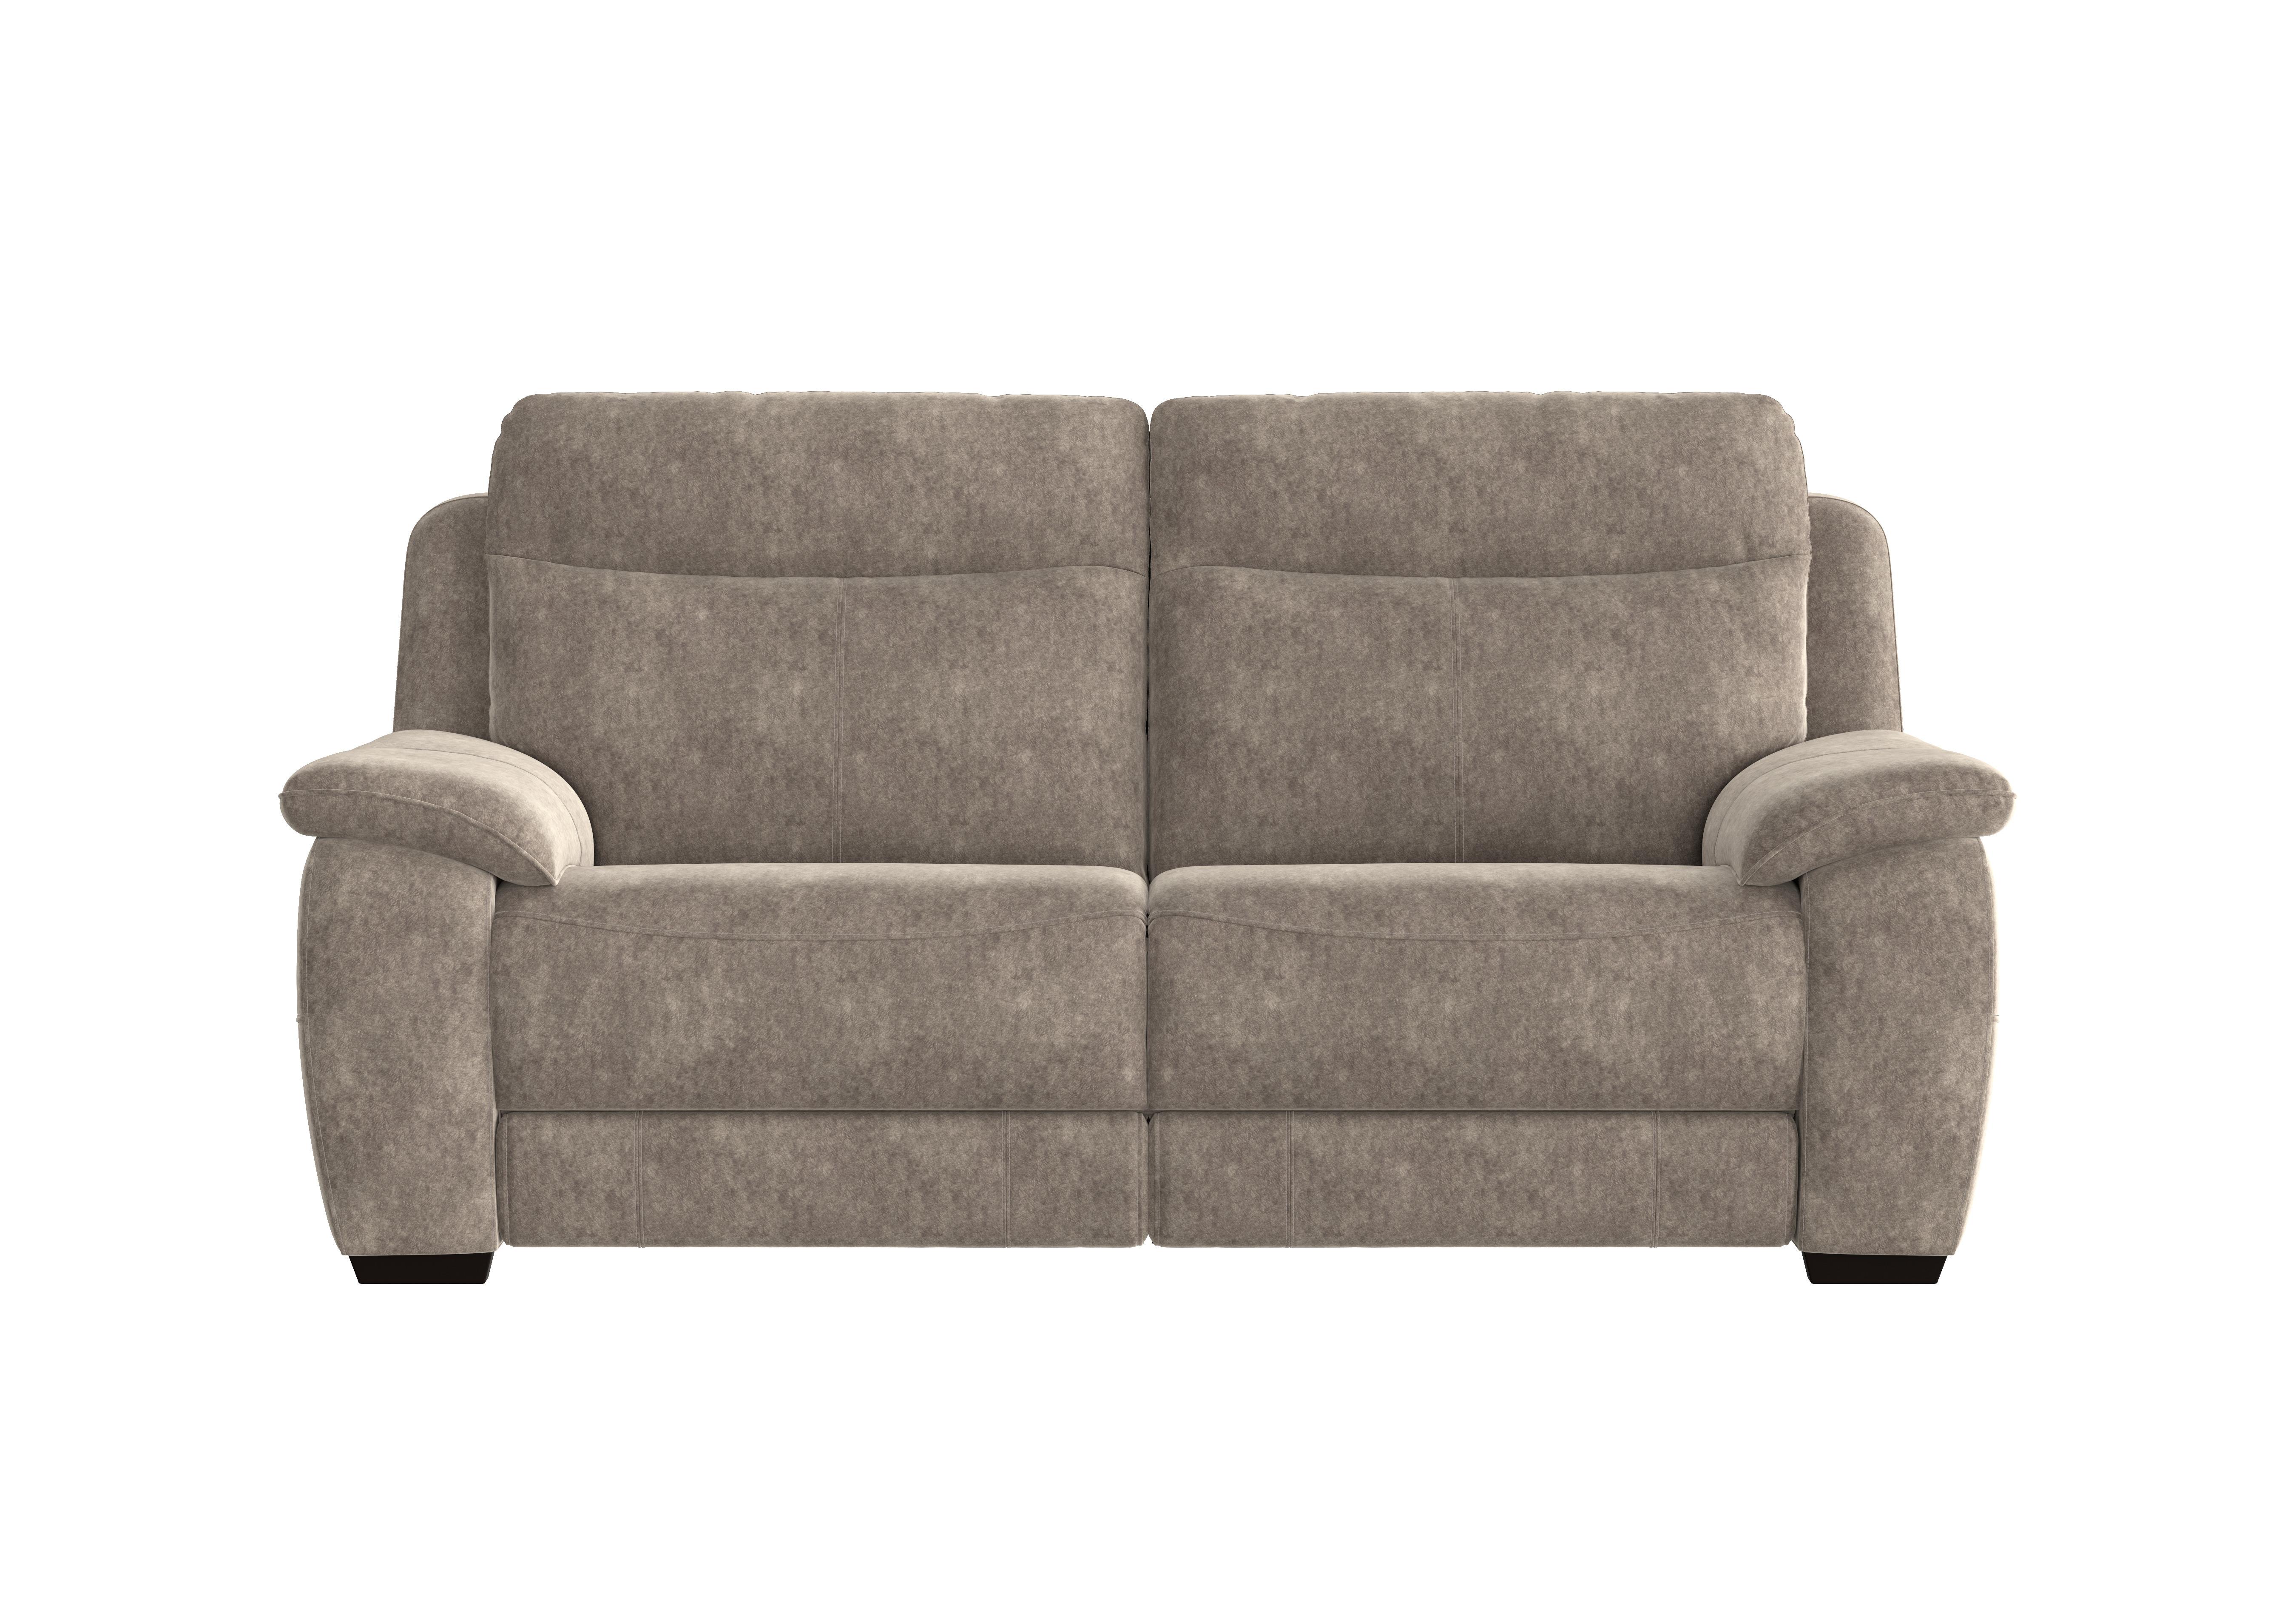 Starlight Express 3 Seater Fabric Sofa in Bfa-Bnn-R29 Fv1 Mink on Furniture Village